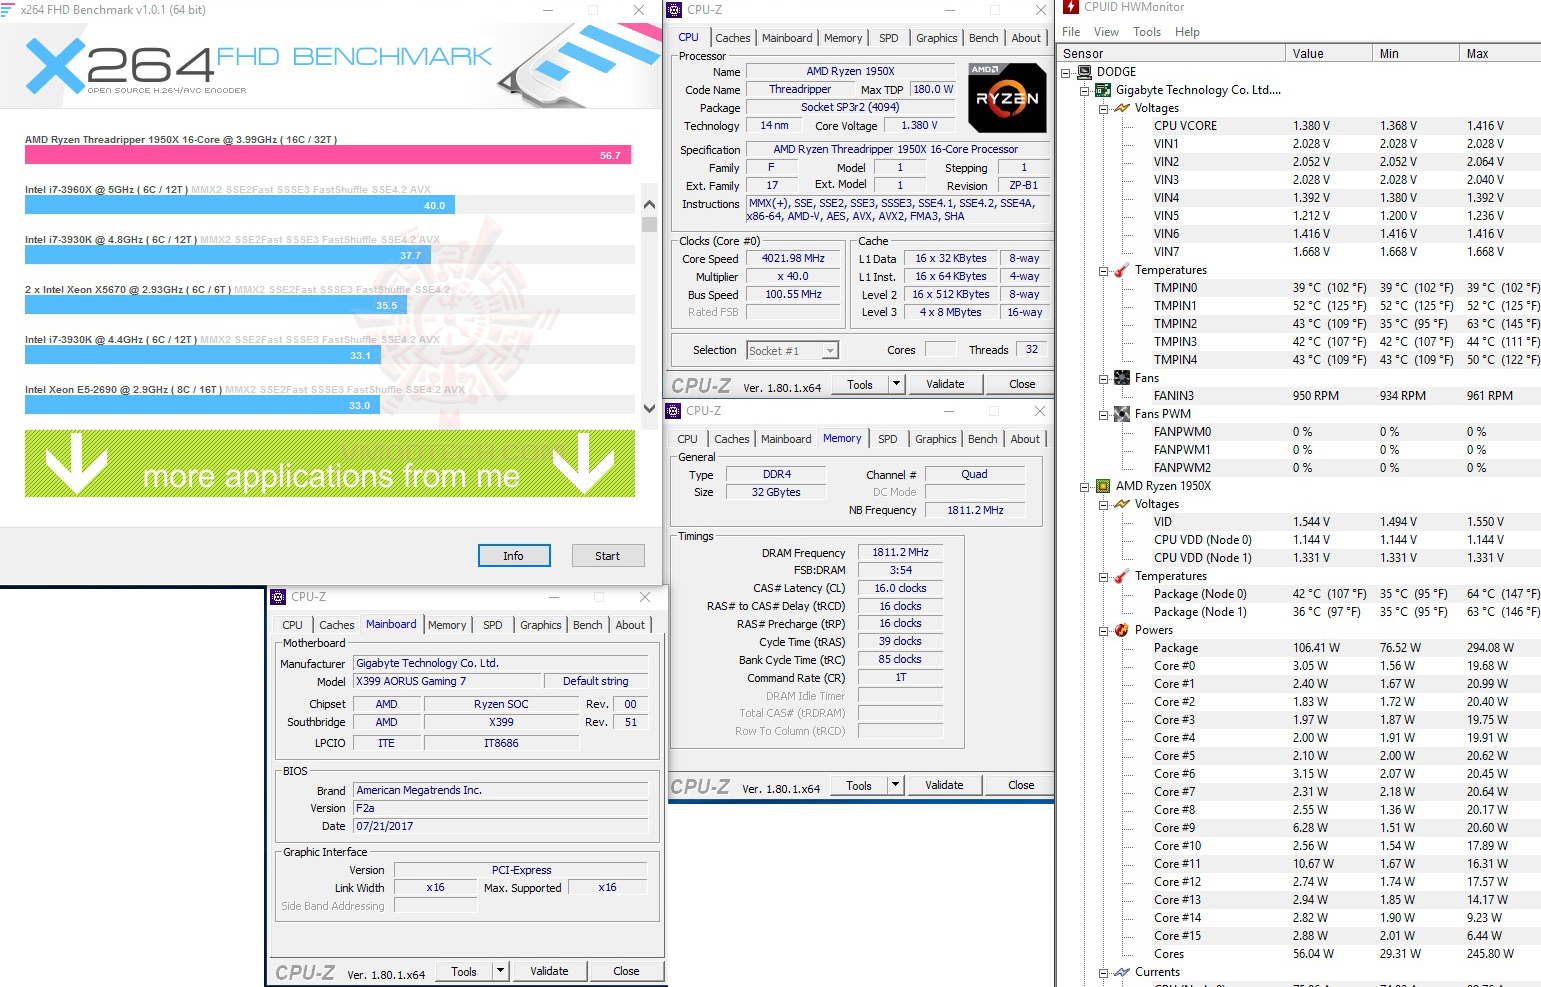 x264 36 G.SKILL Trident Z RGB DDR4 3200MHz 32GB (8GBx4) Quad Channel Review